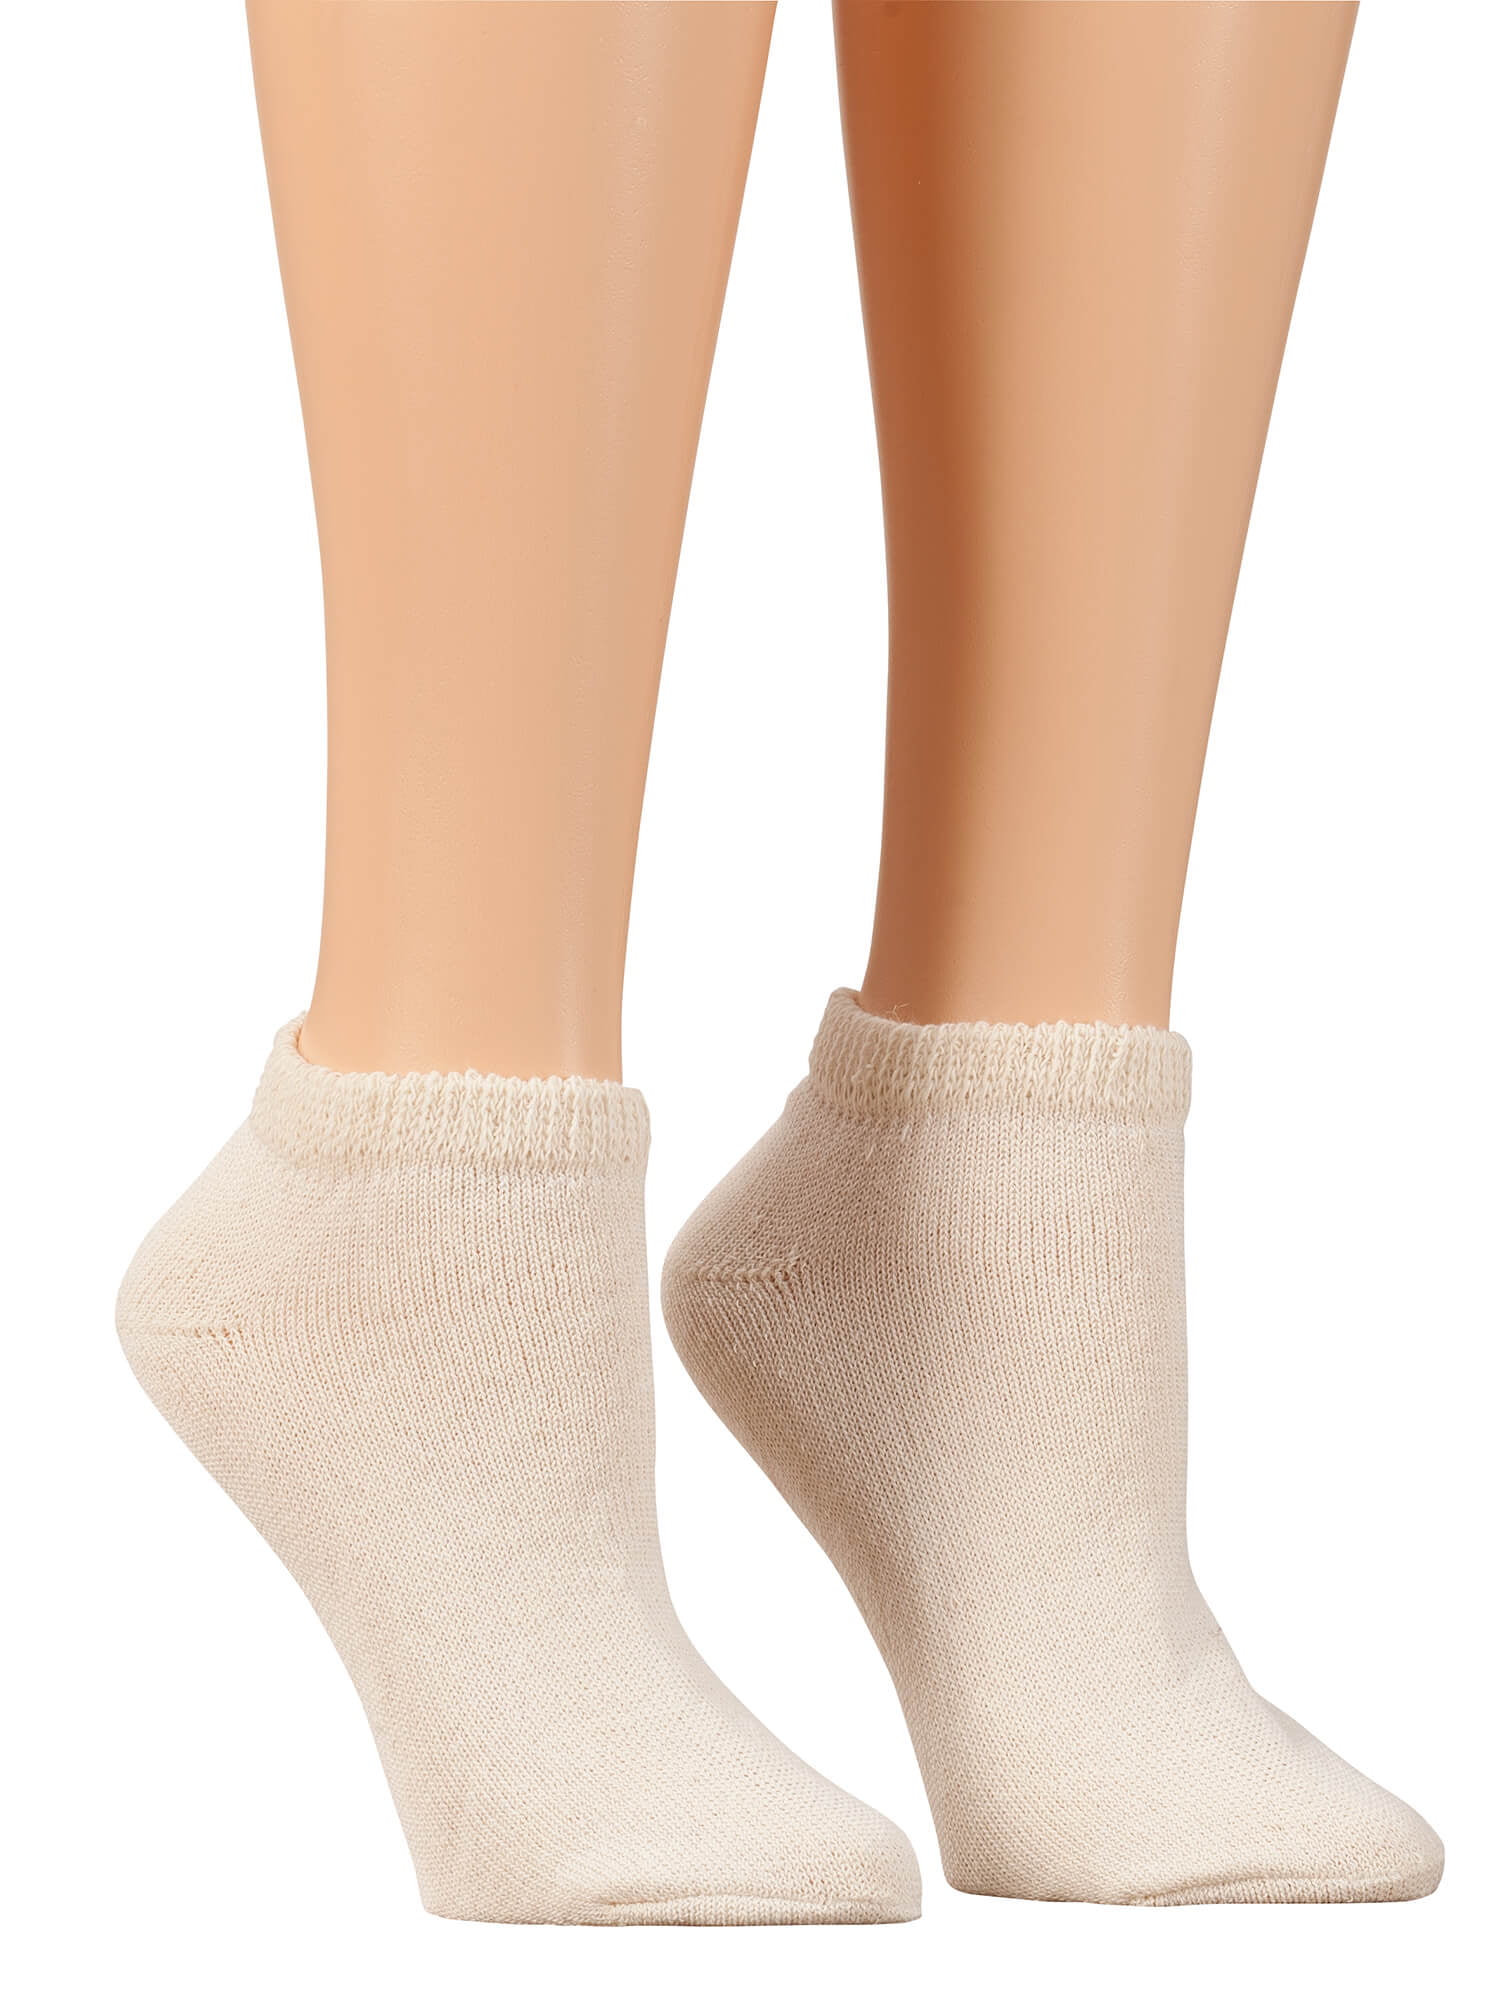 Camano Girls Ankle Socks Pack of 6